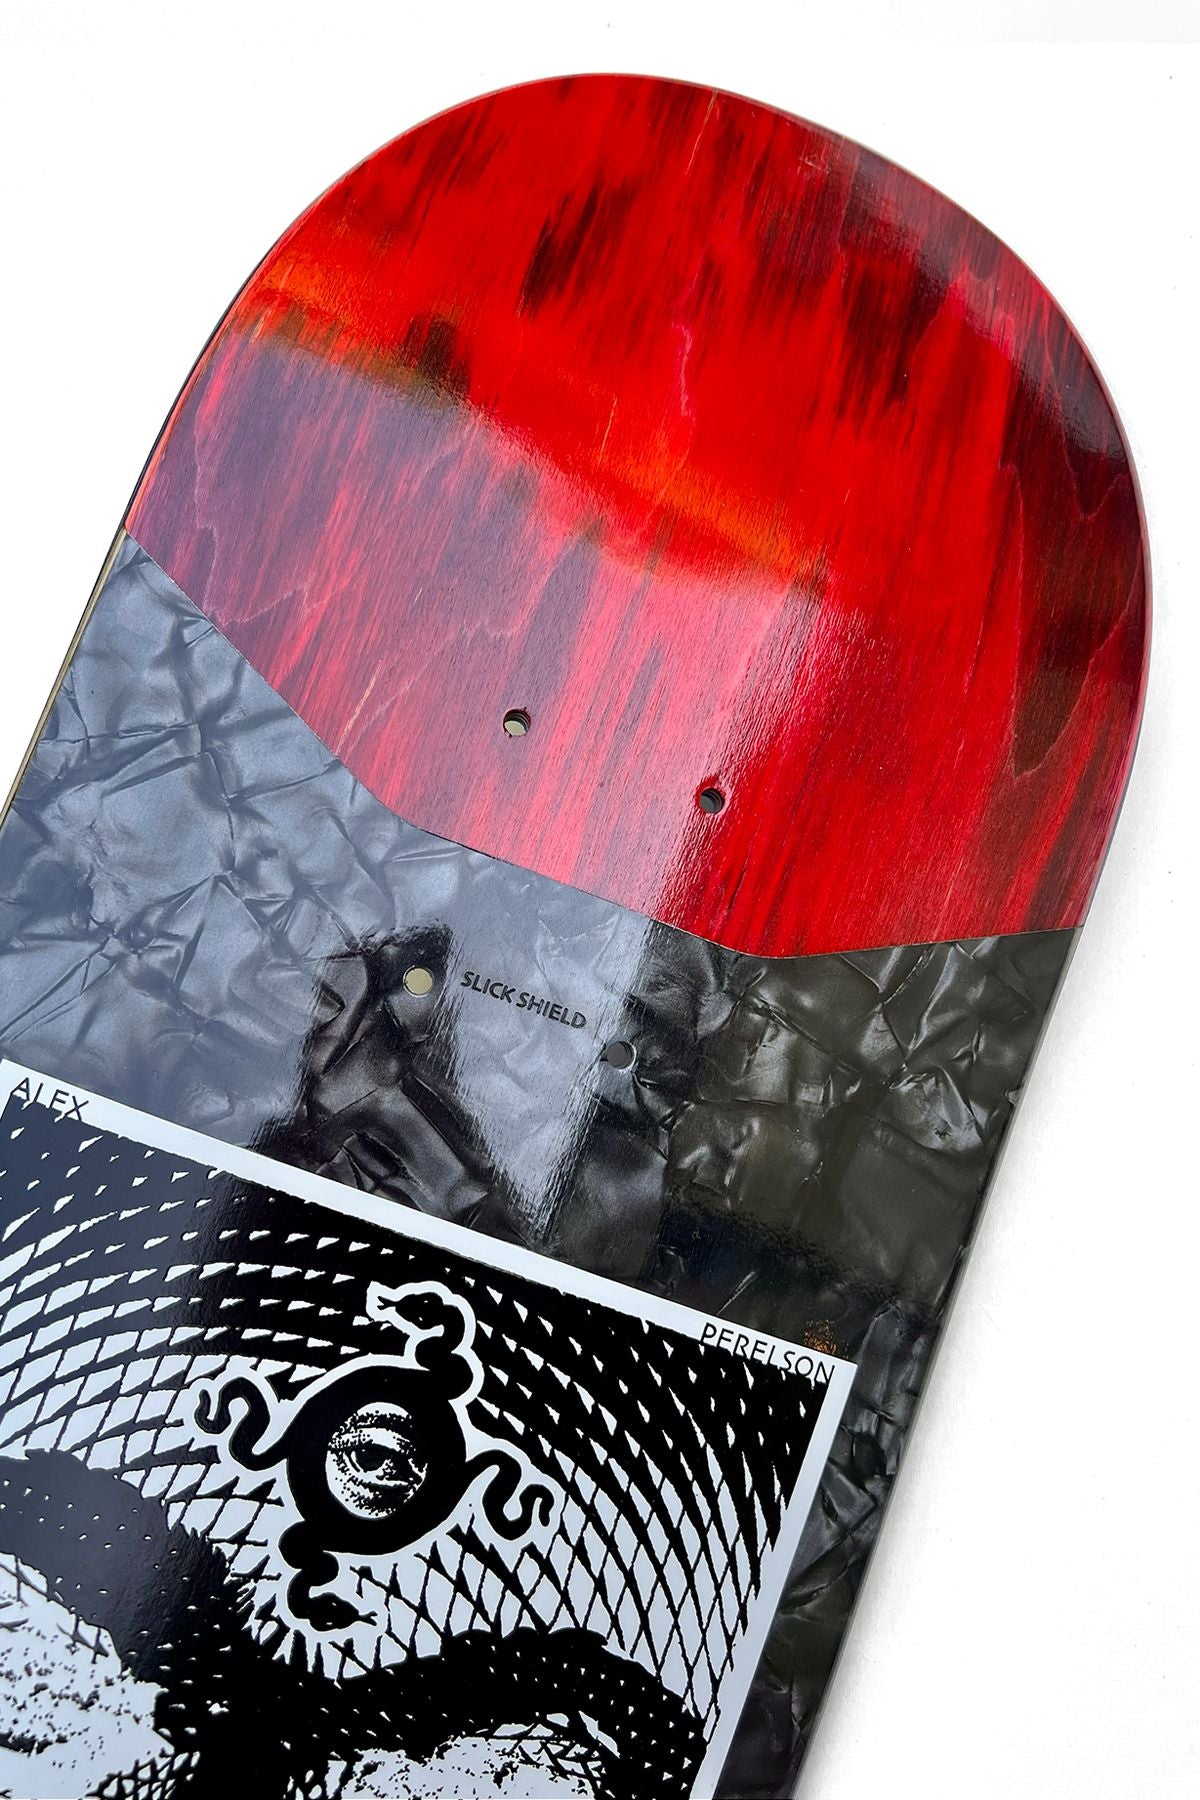 Opera Alex Perelson No Evil Ex7 Slick Shield Skateboard Deck - 8.38"